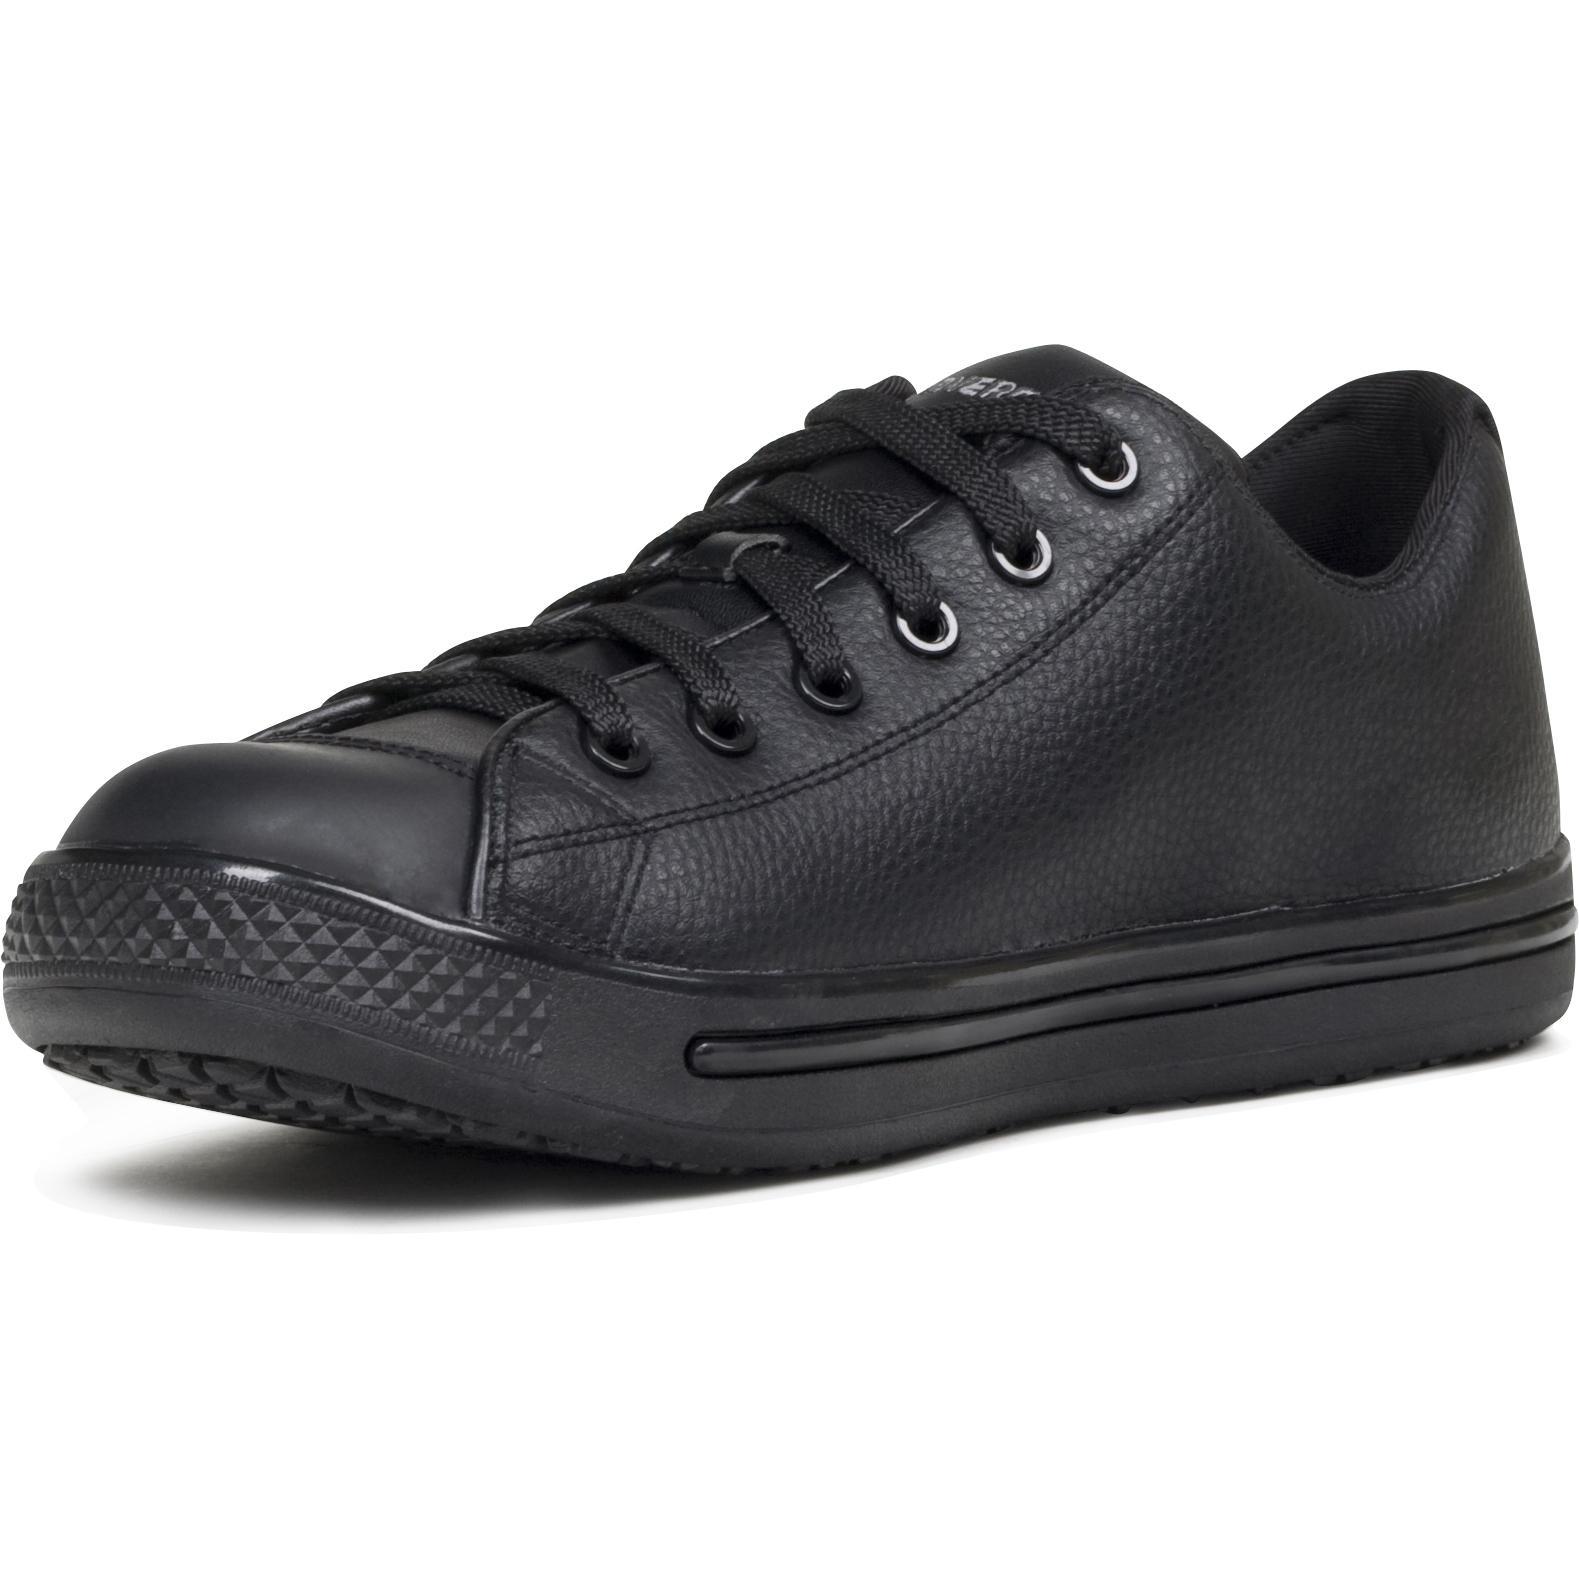 black non slip shoes converse - 63% OFF 